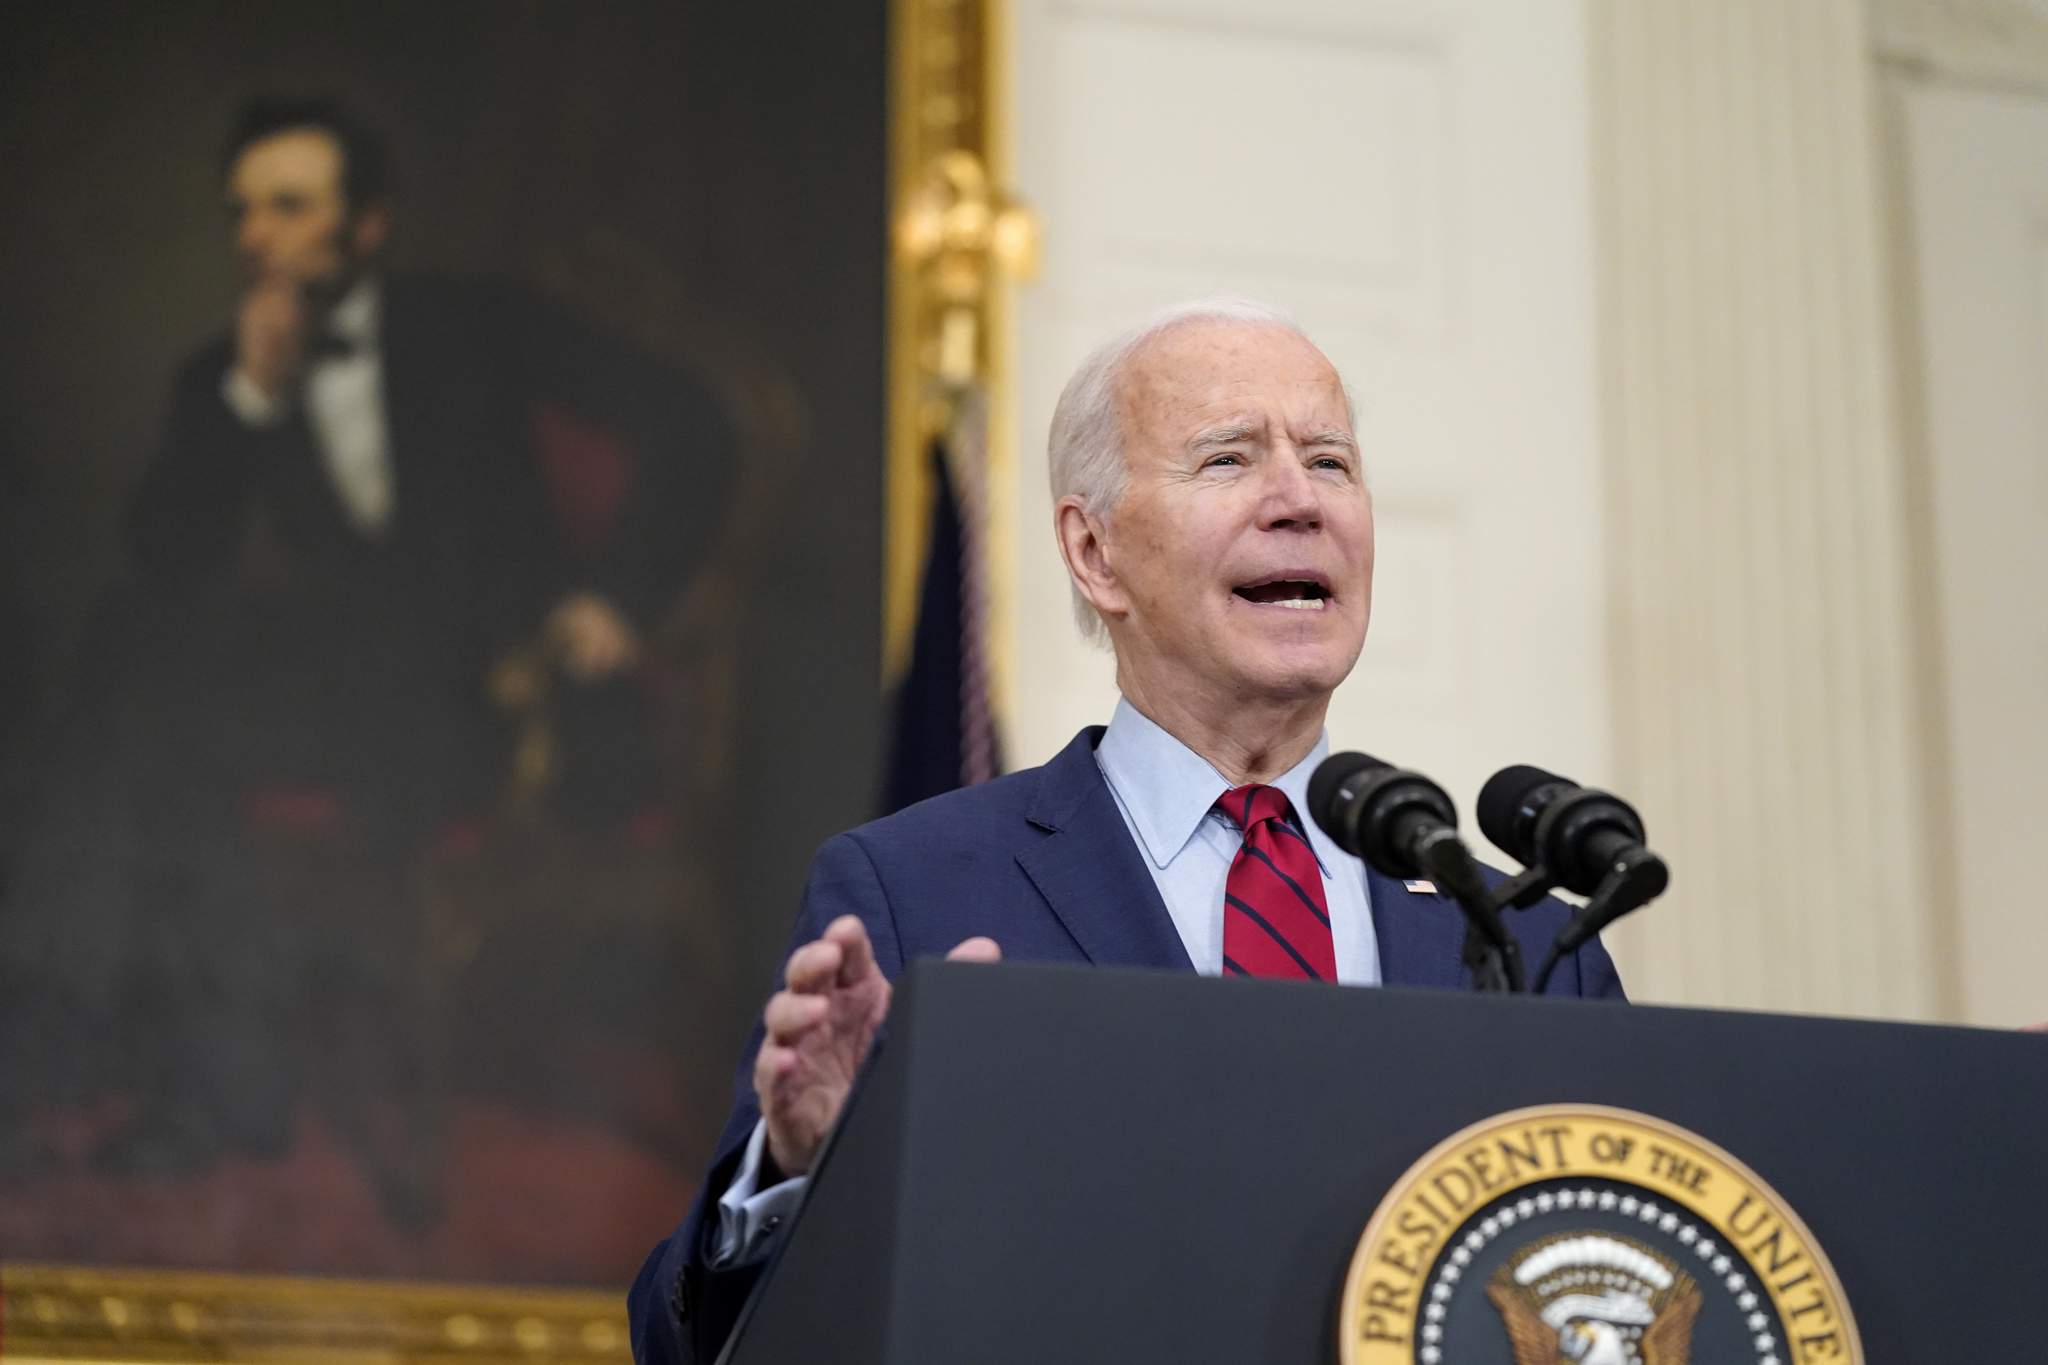 Democrats vow vote on gun bills; Biden says ‘we have to act’